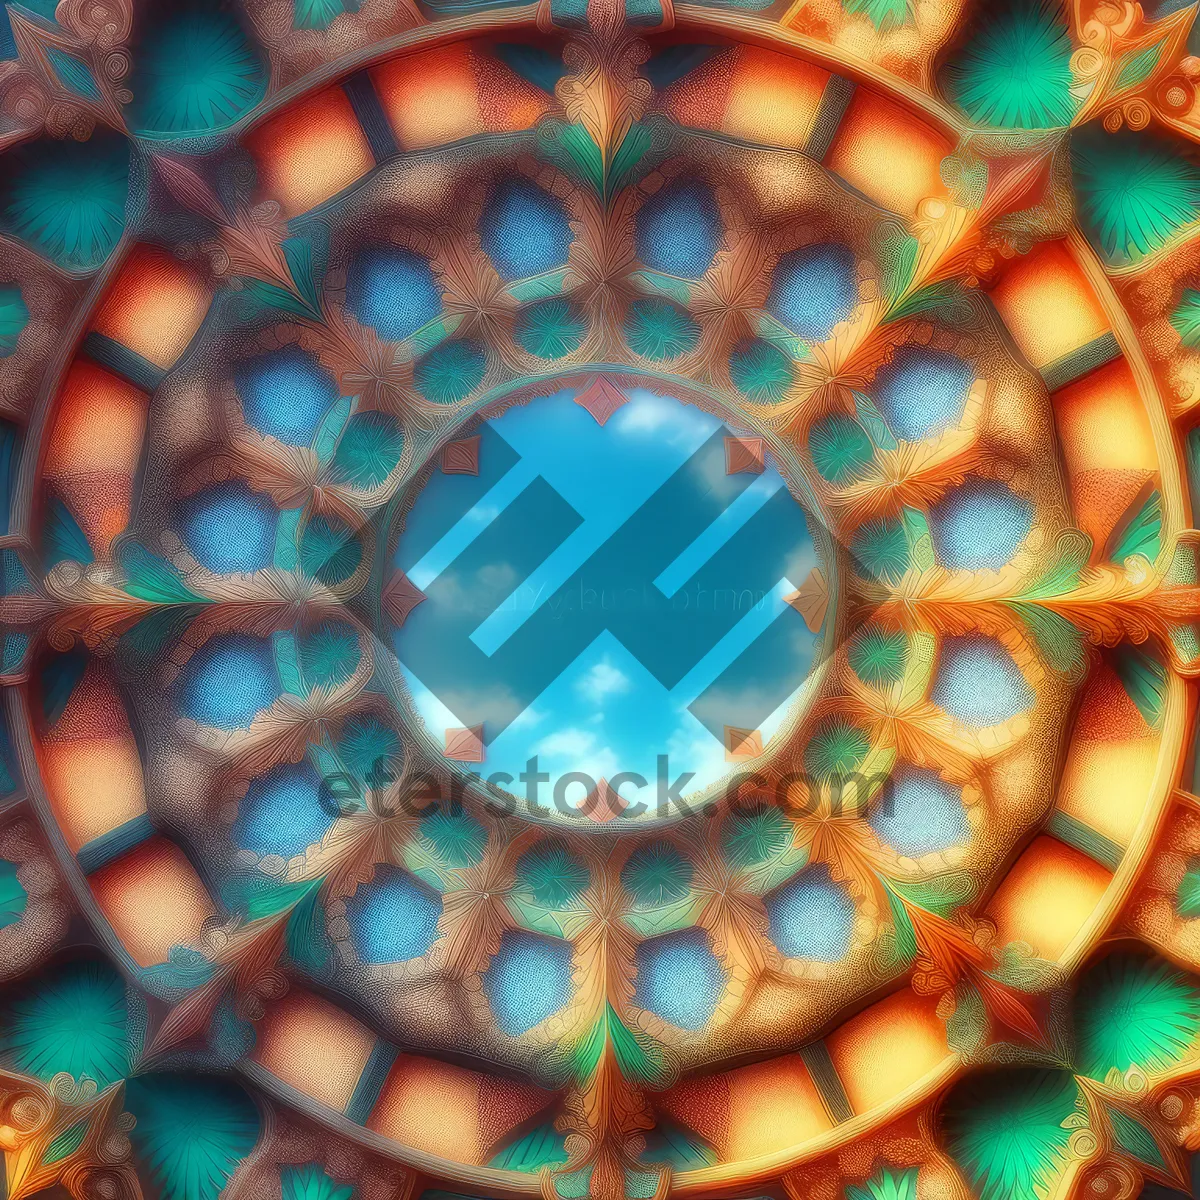 Picture of Colorful Geometric Mosaic Creation: Futuristic Digital Design